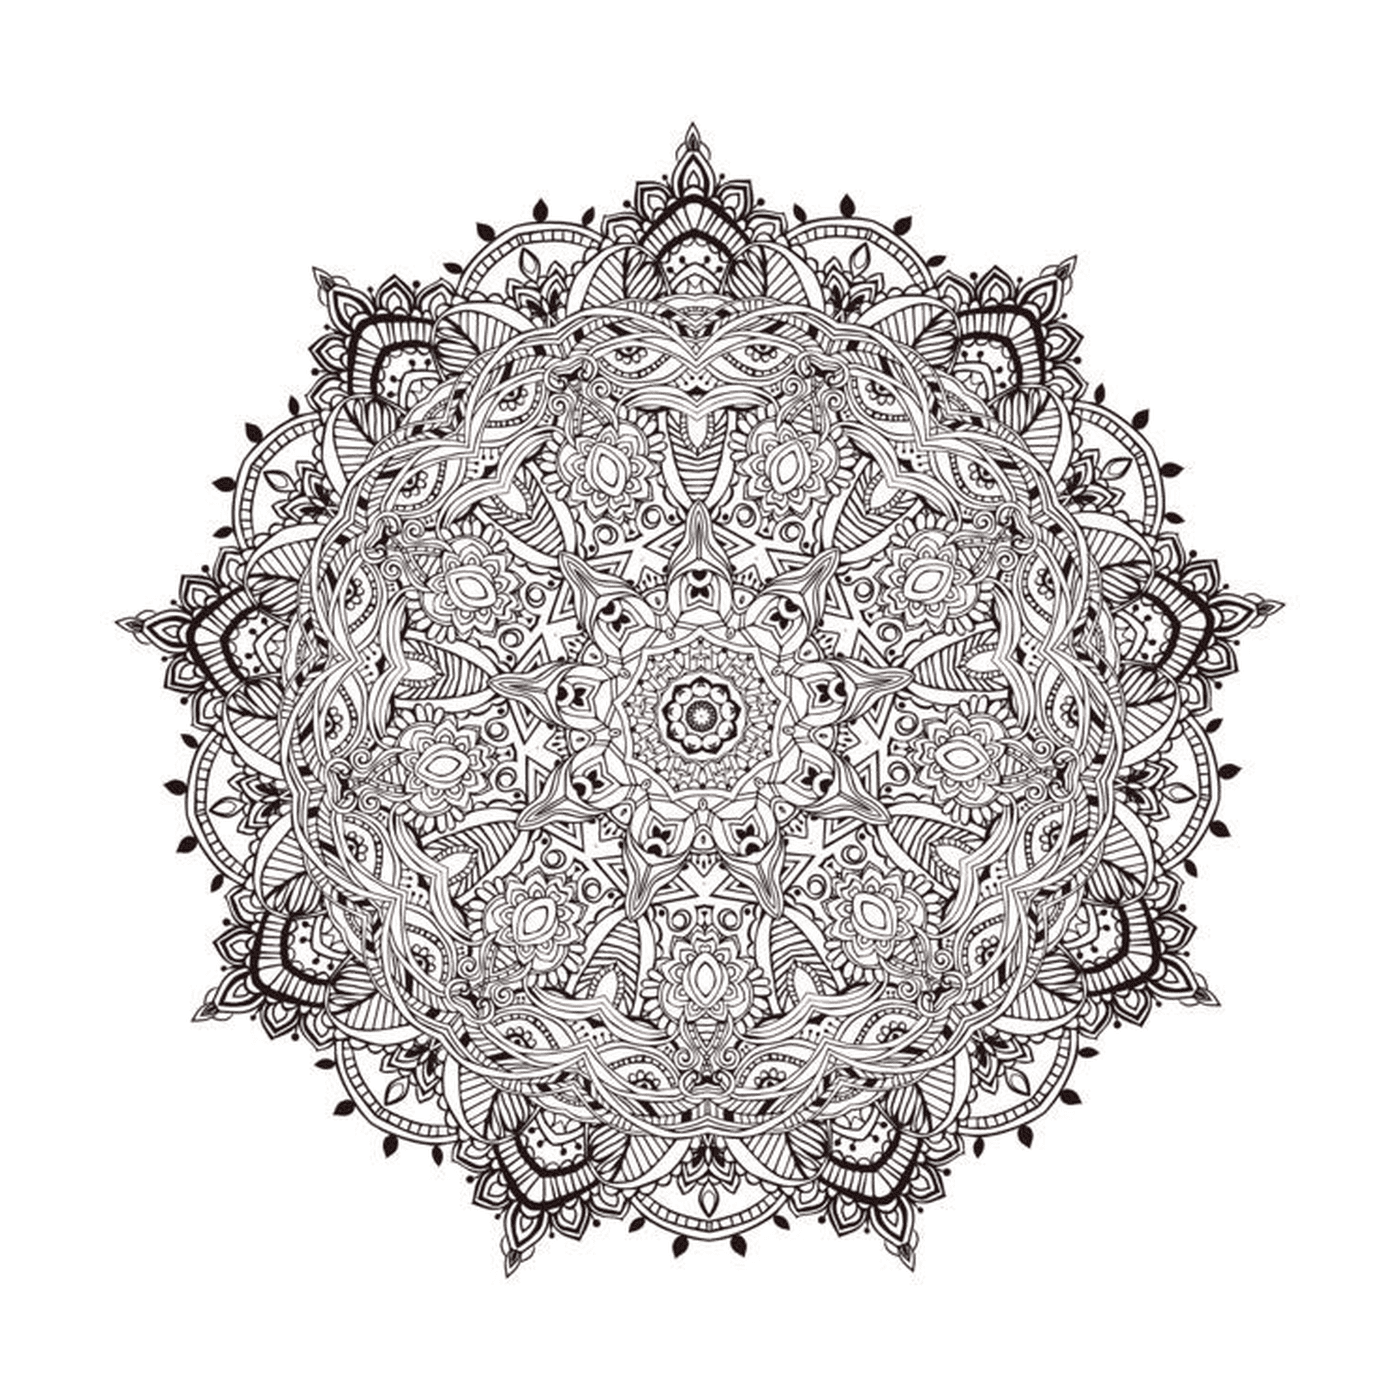  Detailliertes Mandala mit floralem Motiv 